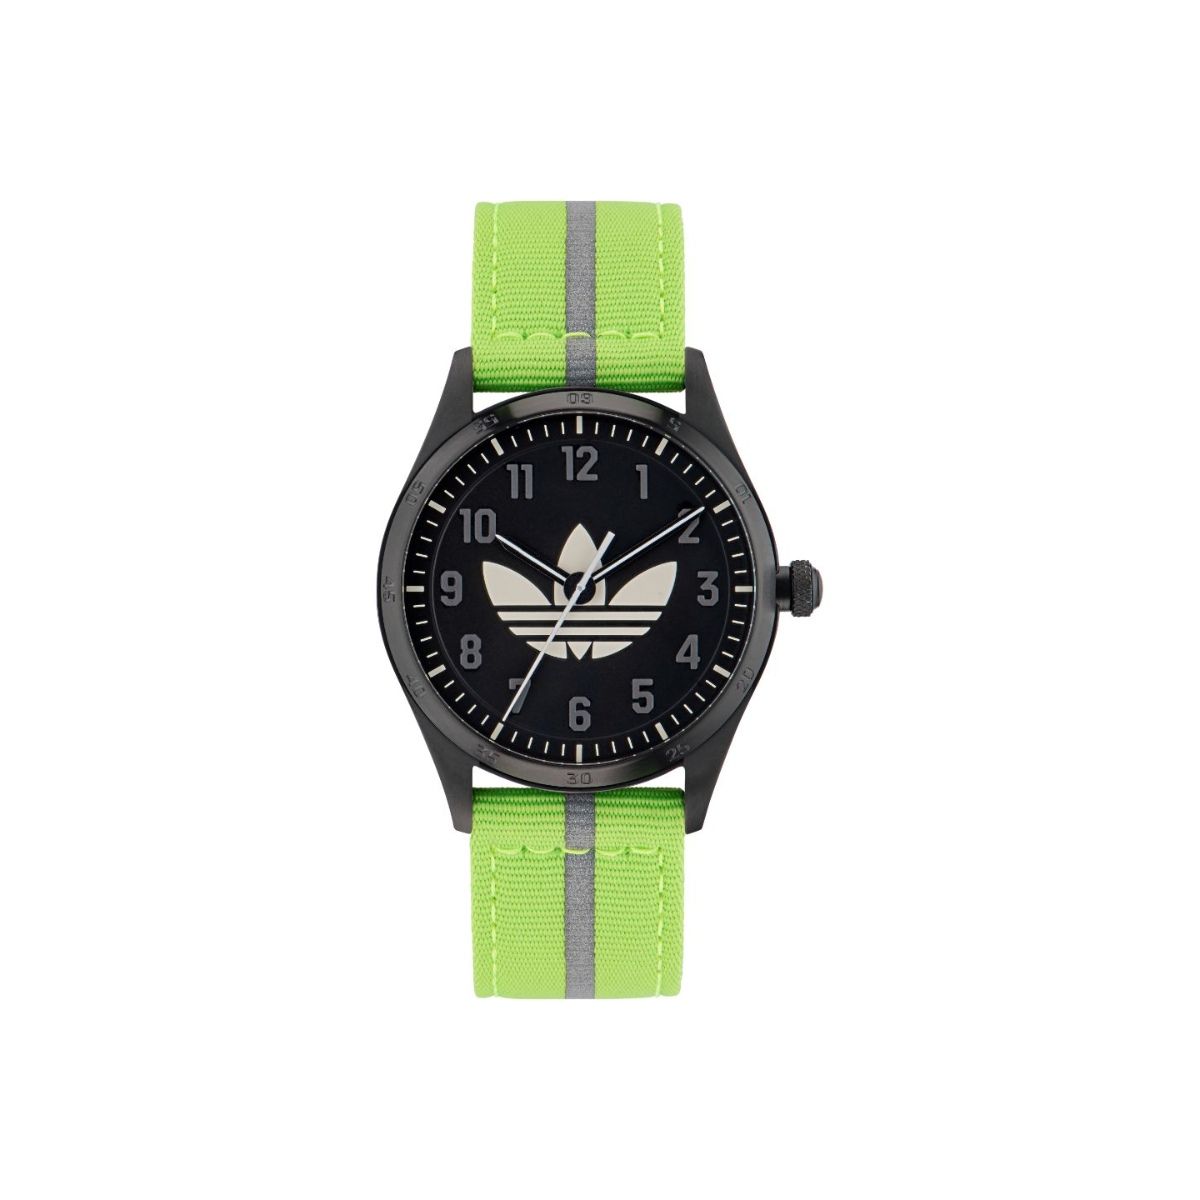 adidas Originals unveils new watch collection for SS23 season - HIGHXTAR.